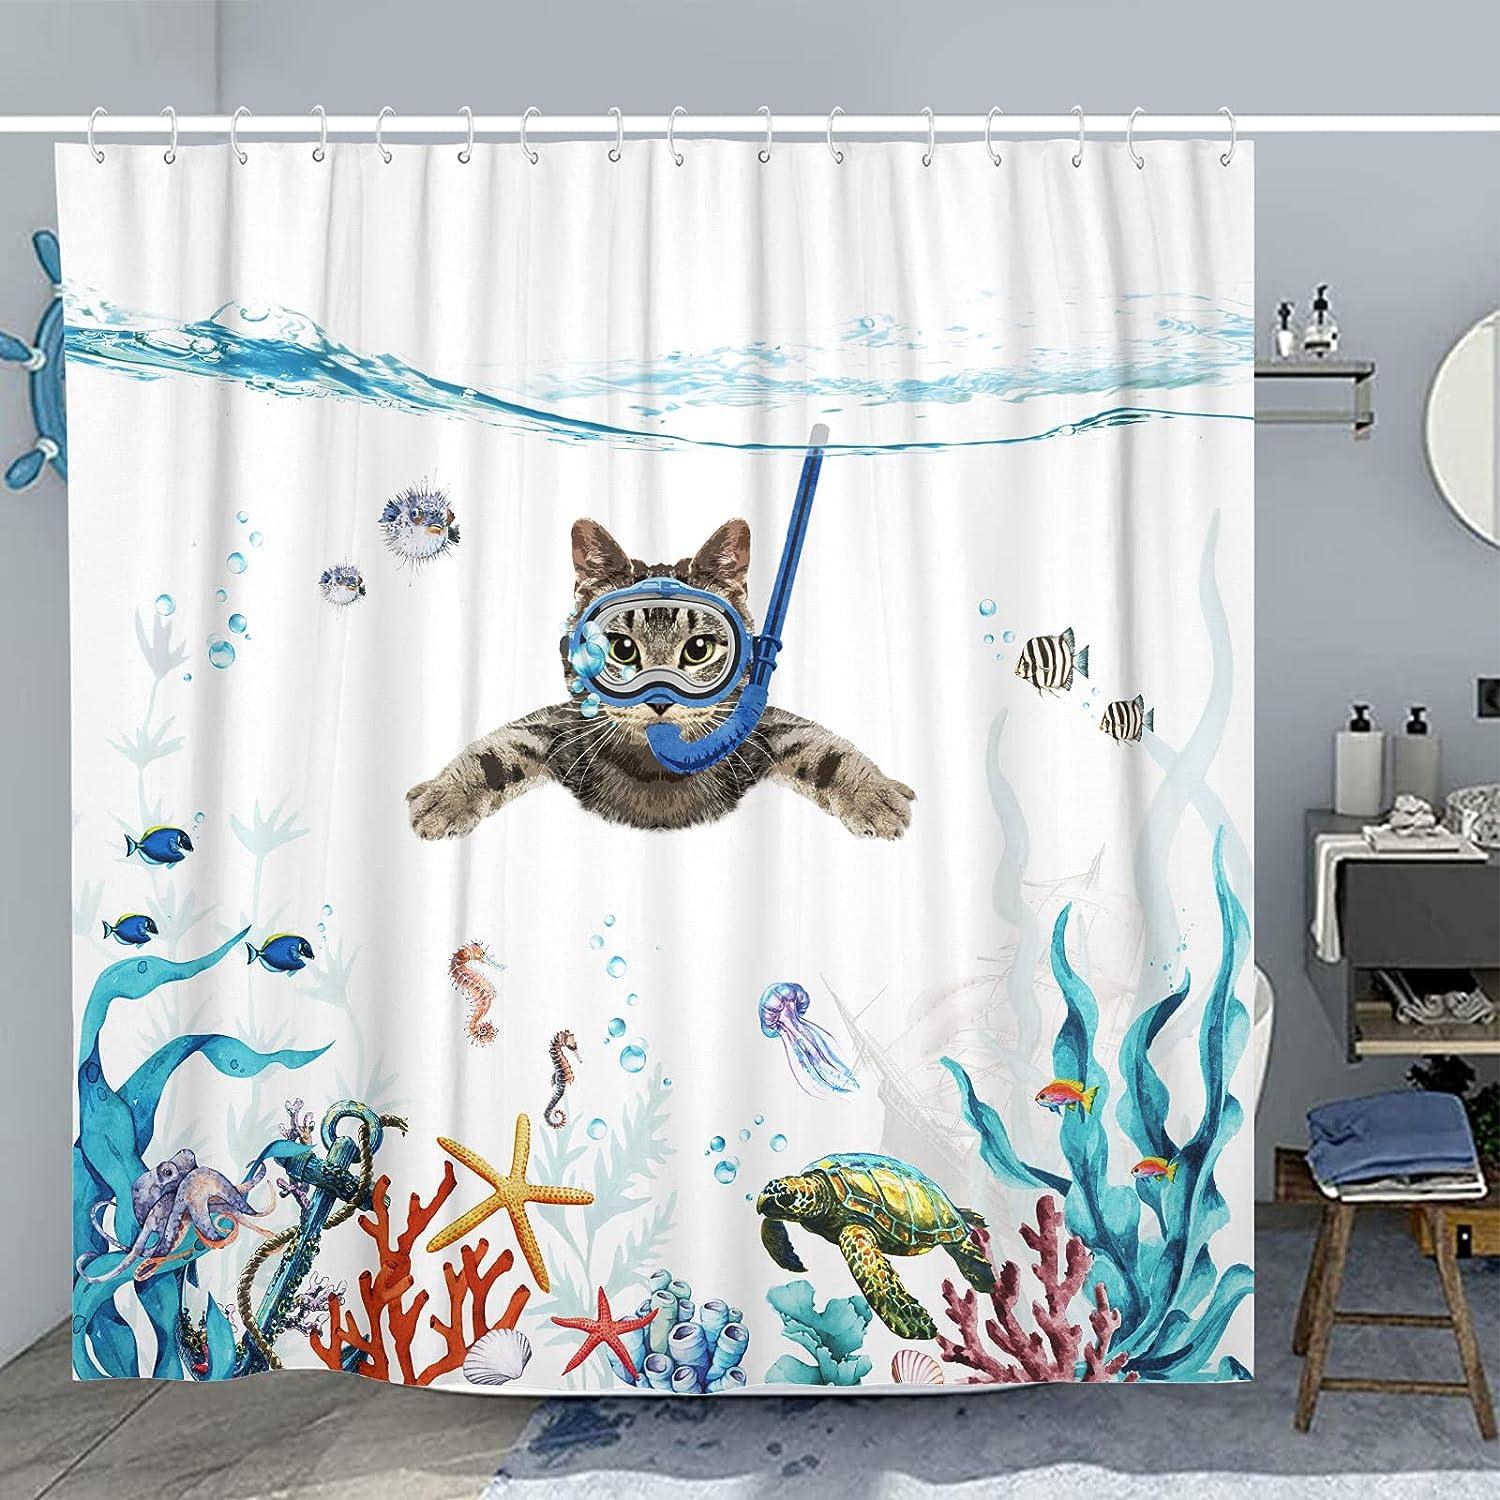  Divertida cortina de ducha de tela de gato para baño